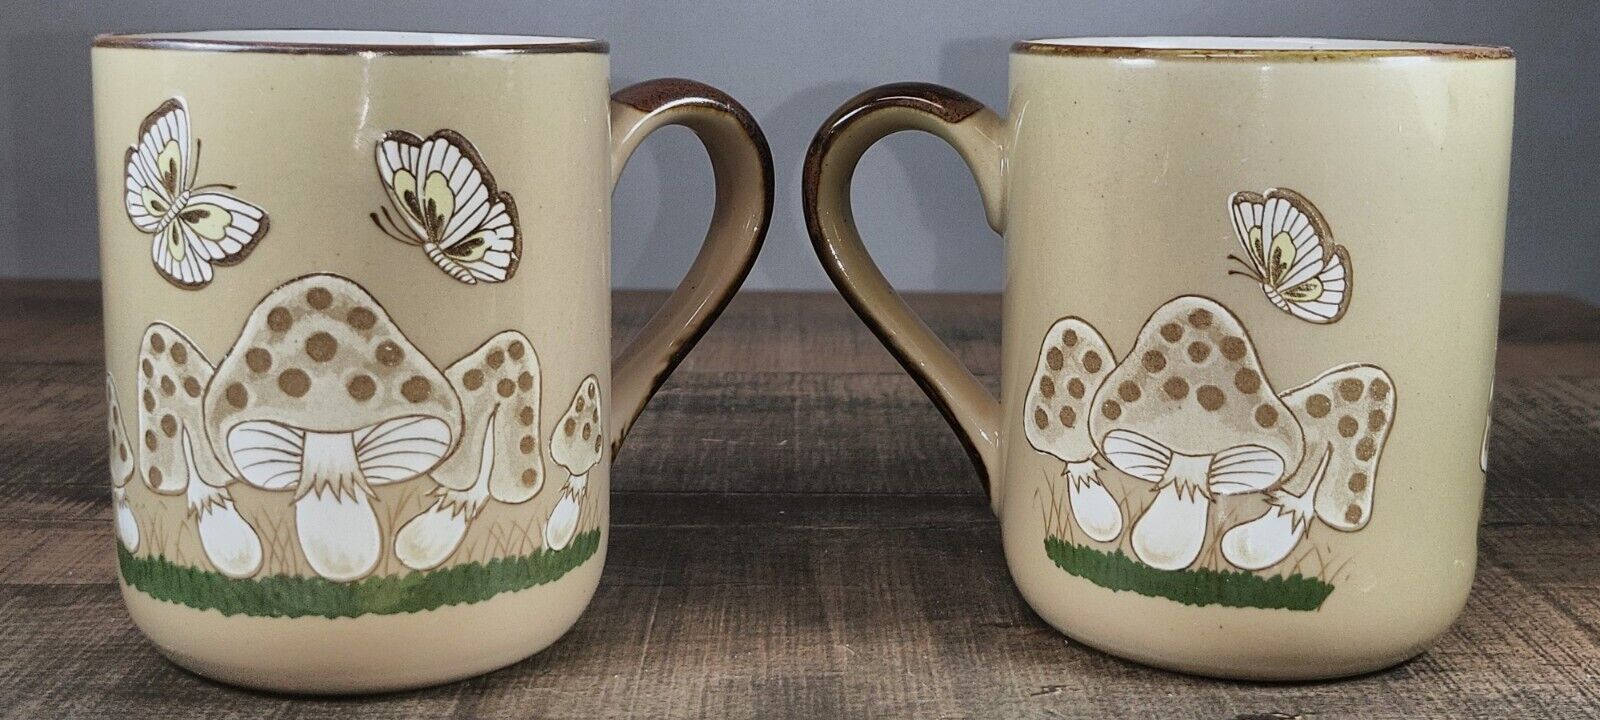 2 Vintage Stoneware Mugs/Cups - Vintage Otagiri? Mushrooms Butterflies Brown Mug